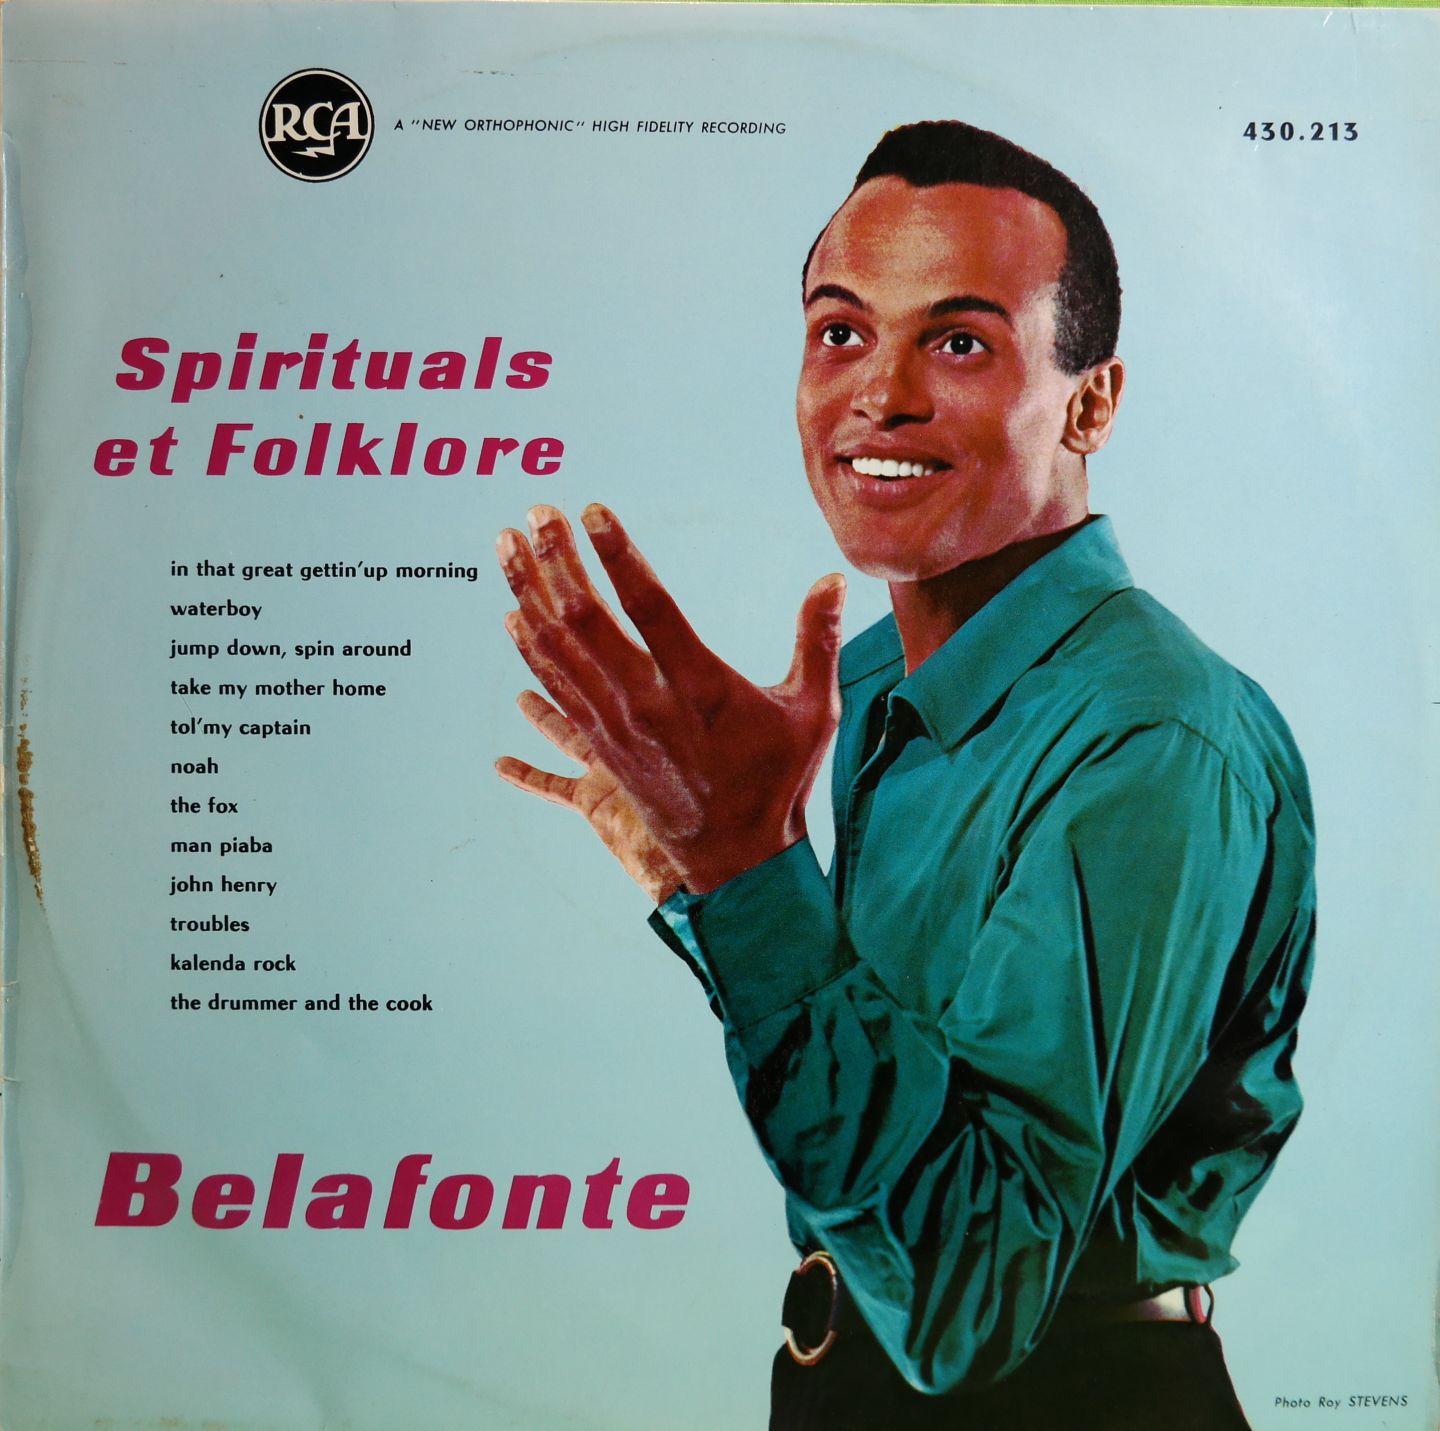 Belafonte - Spirituals et Folklore - 430.213